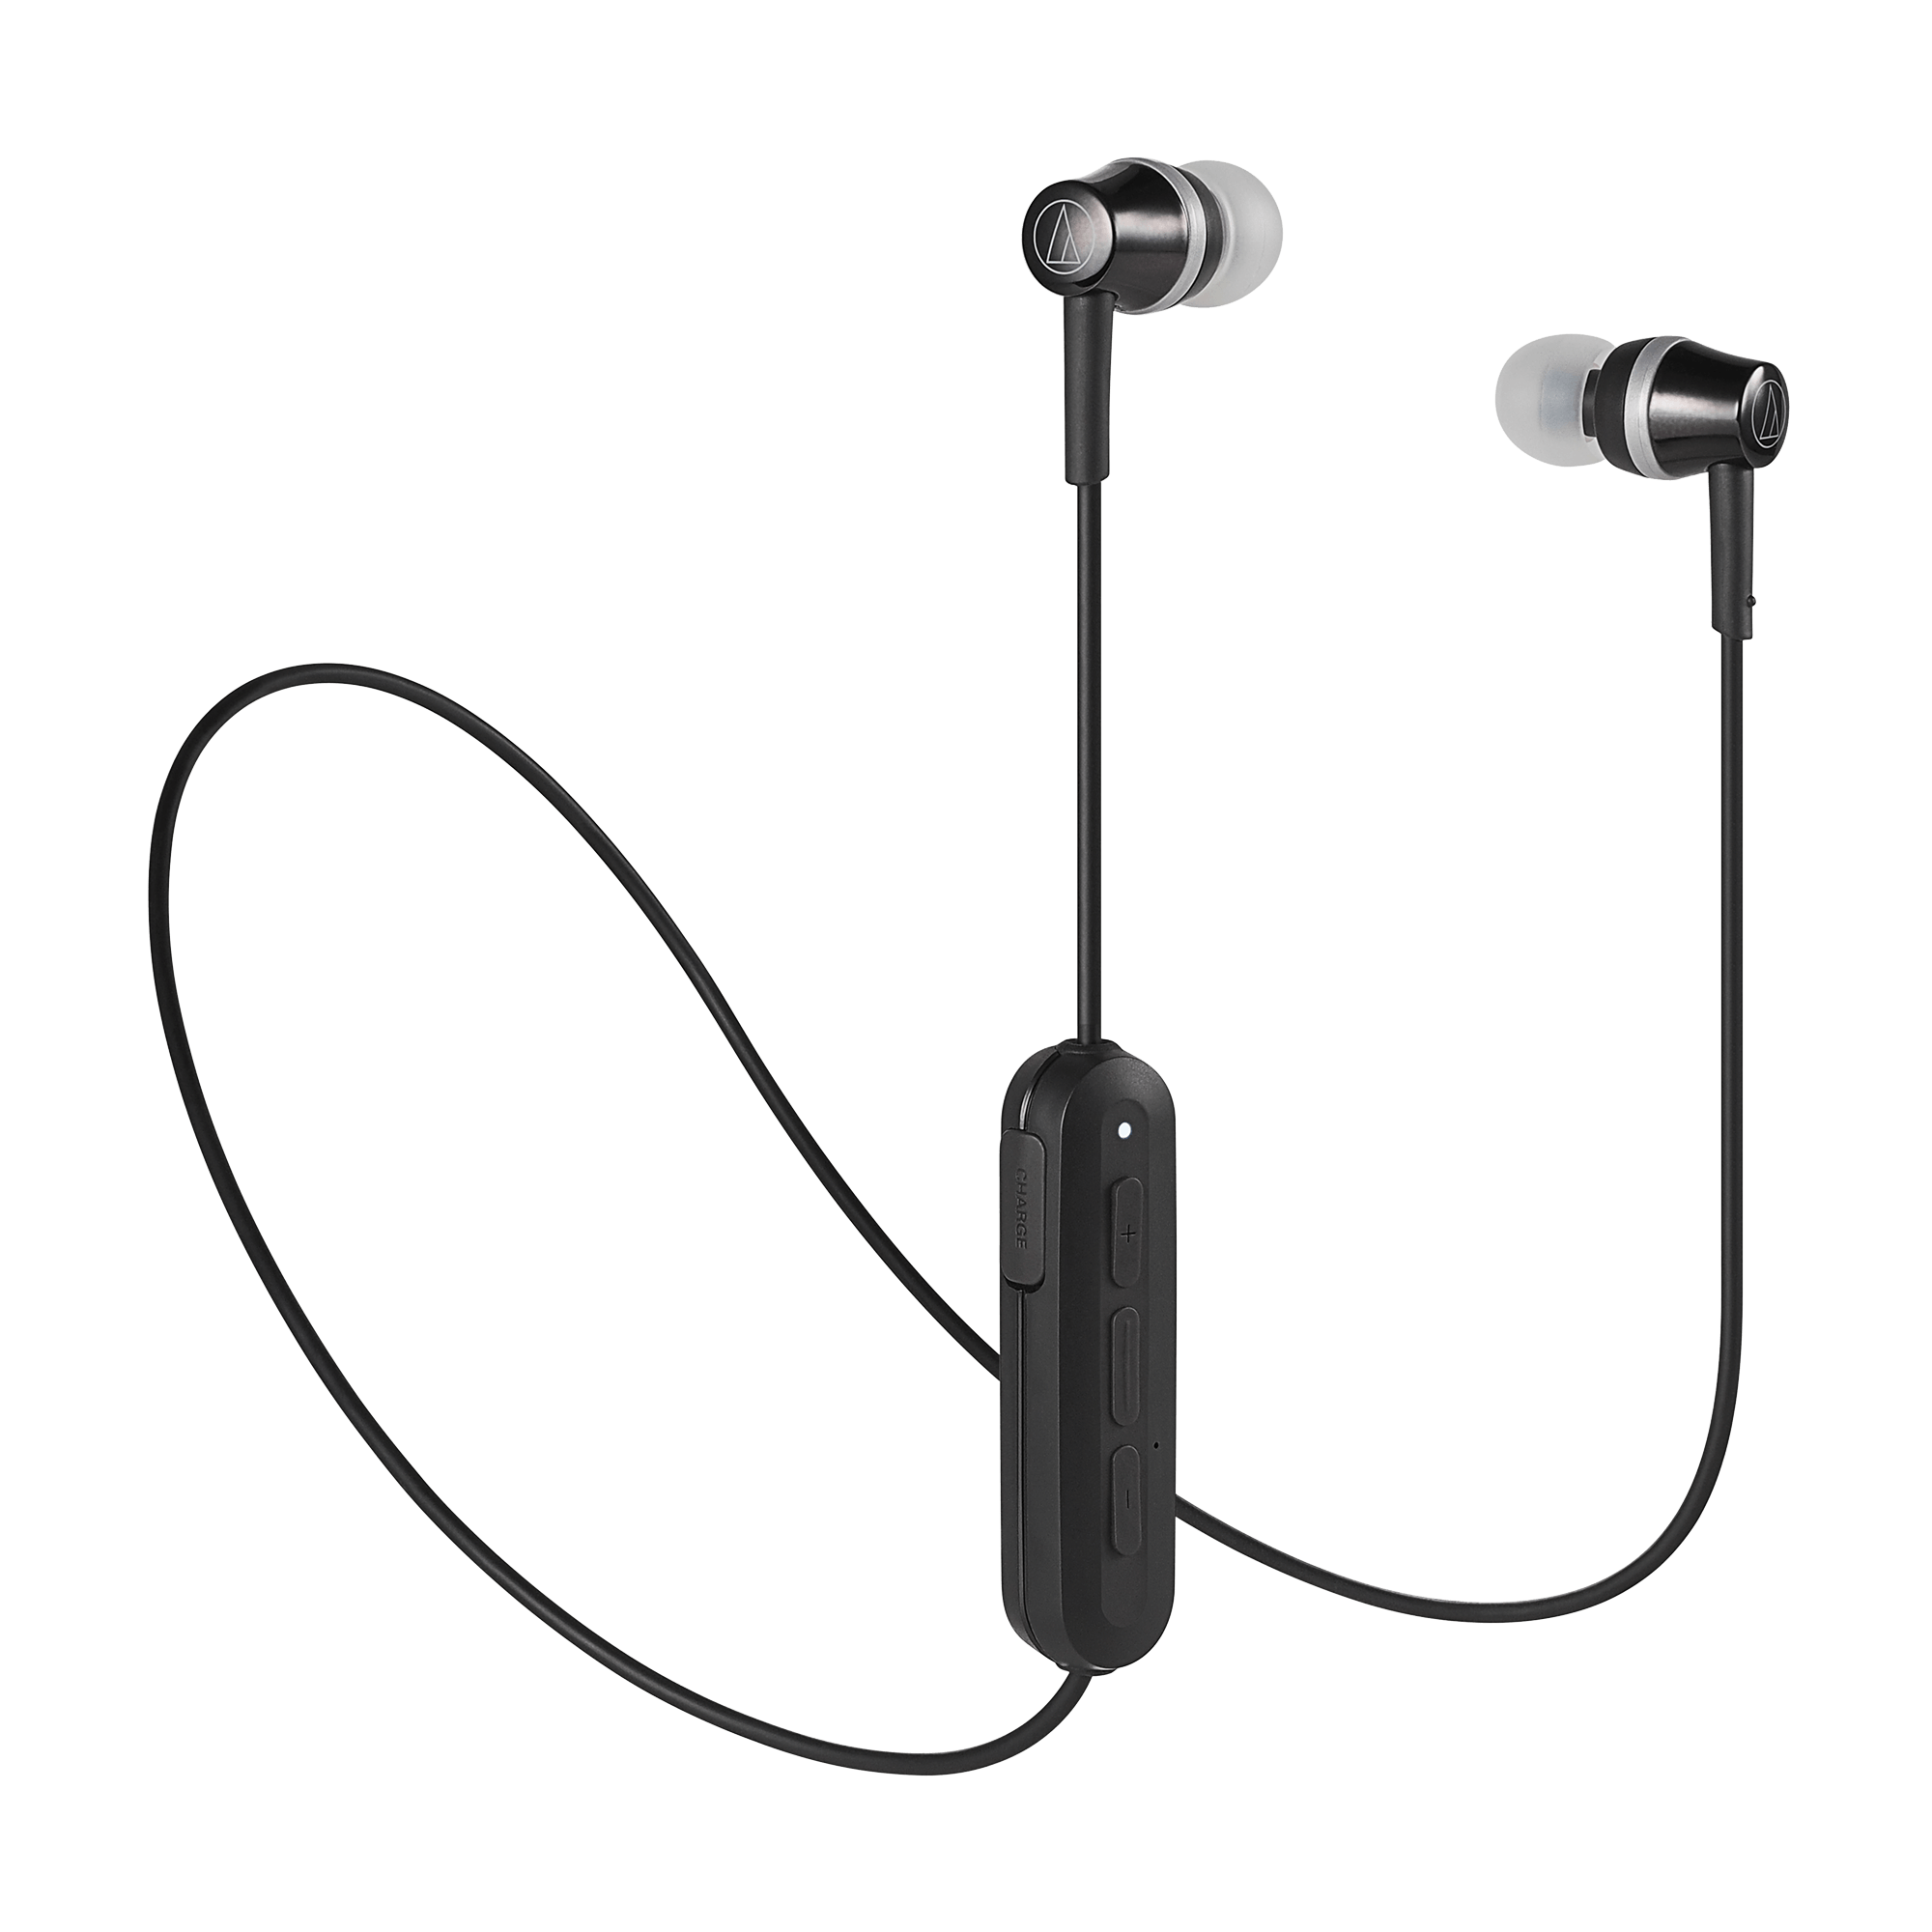 ATH-CKR300BT - Wireless In-Ear Headphones | Audio-Technica